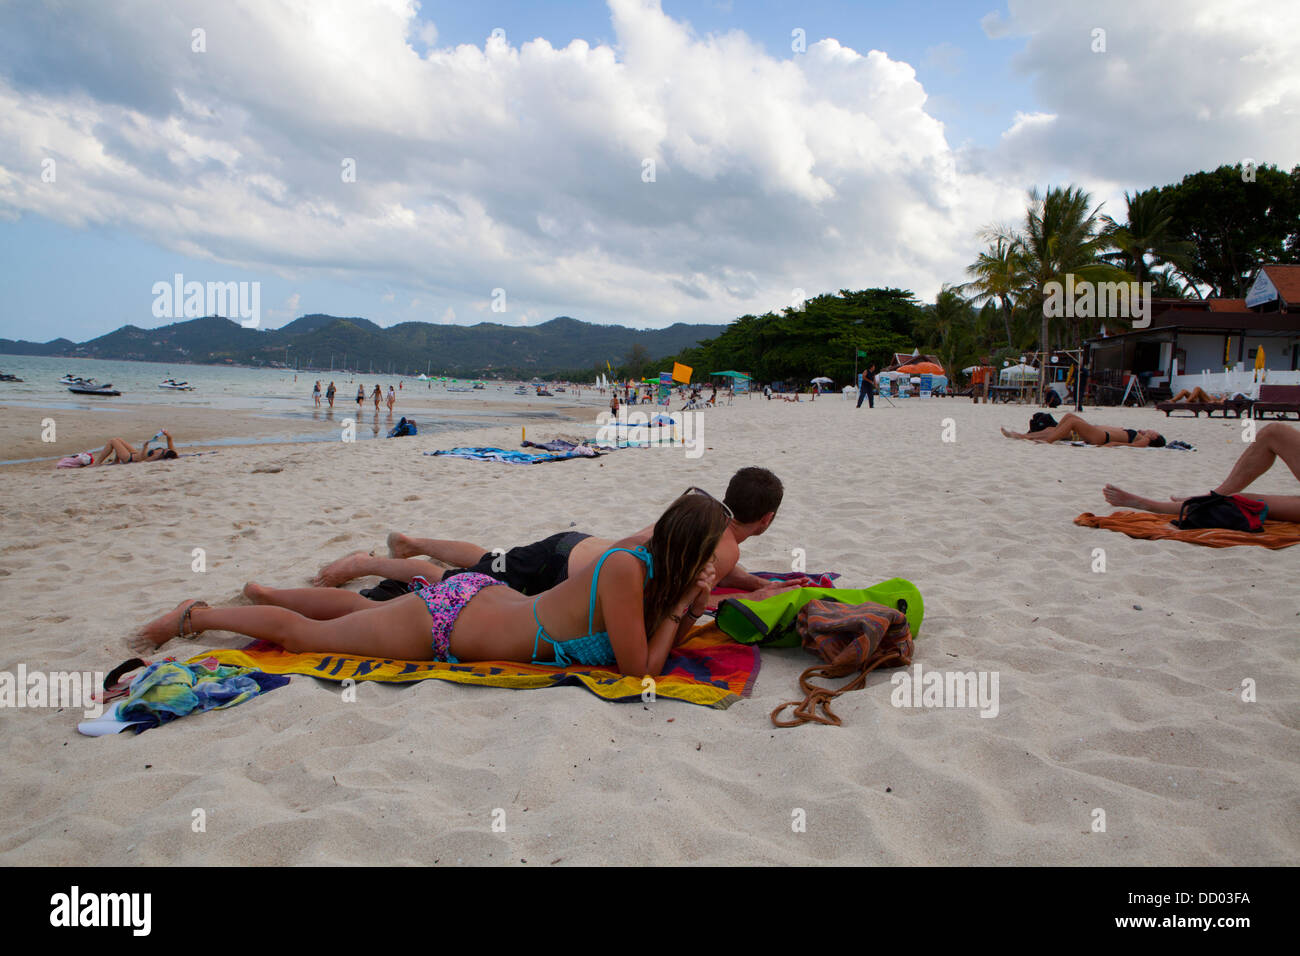 Un par sunbathes Hat Chaweng Beach en la isla de Ko Samui en el Golfo de Tailandia. Foto de stock